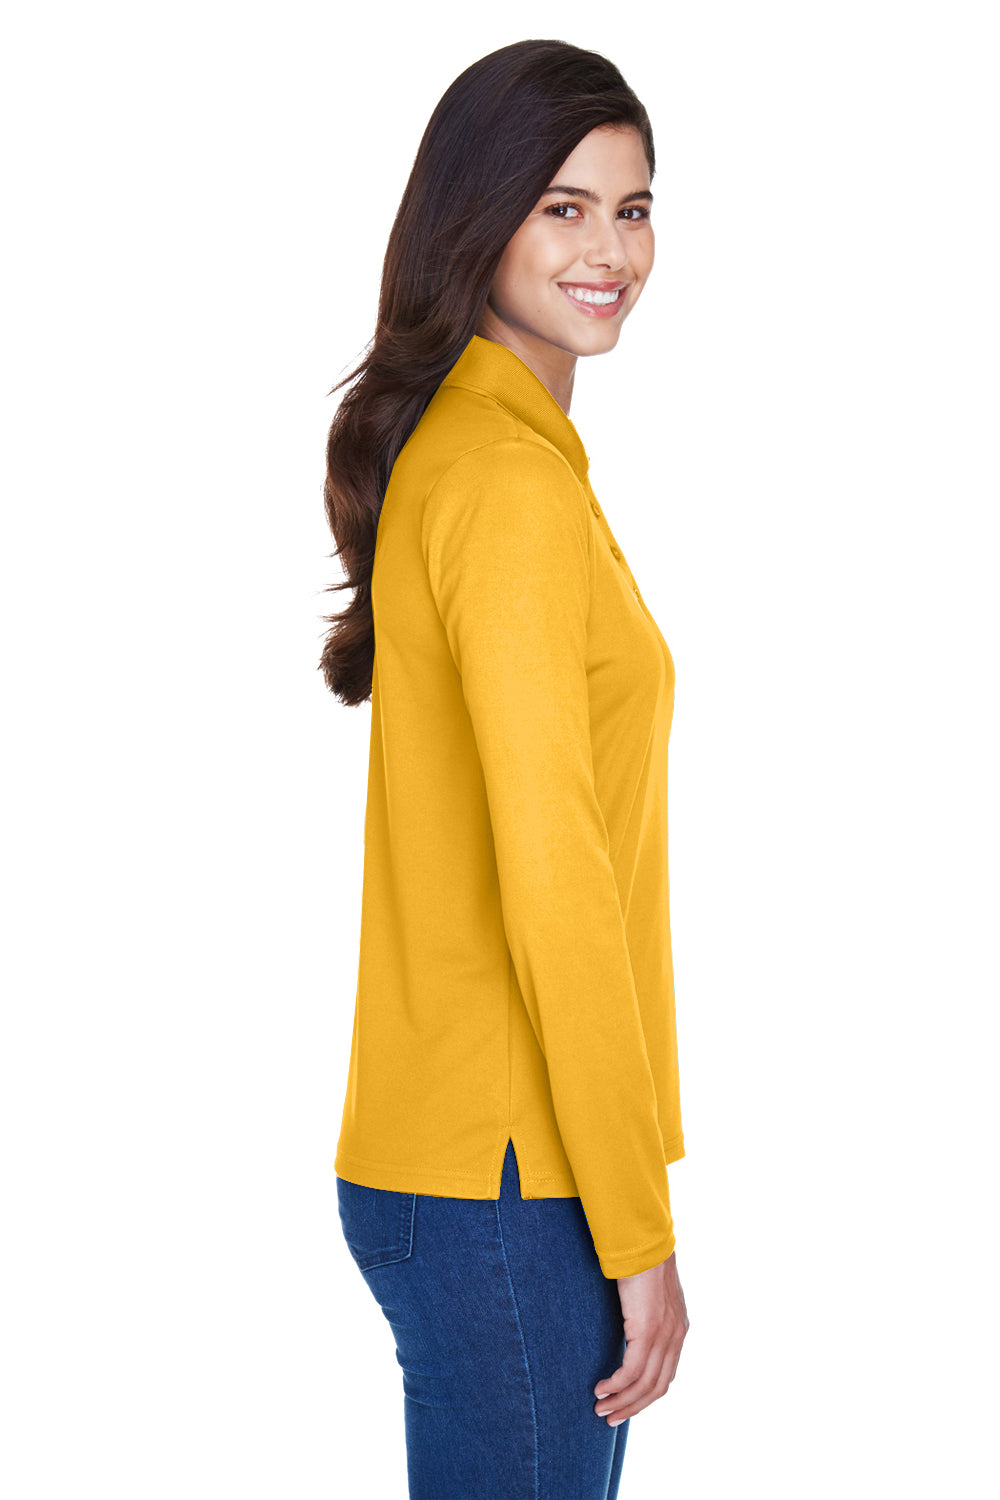 Core 365 78192 Womens Pinnacle Performance Moisture Wicking Long Sleeve Polo Shirt Gold Side